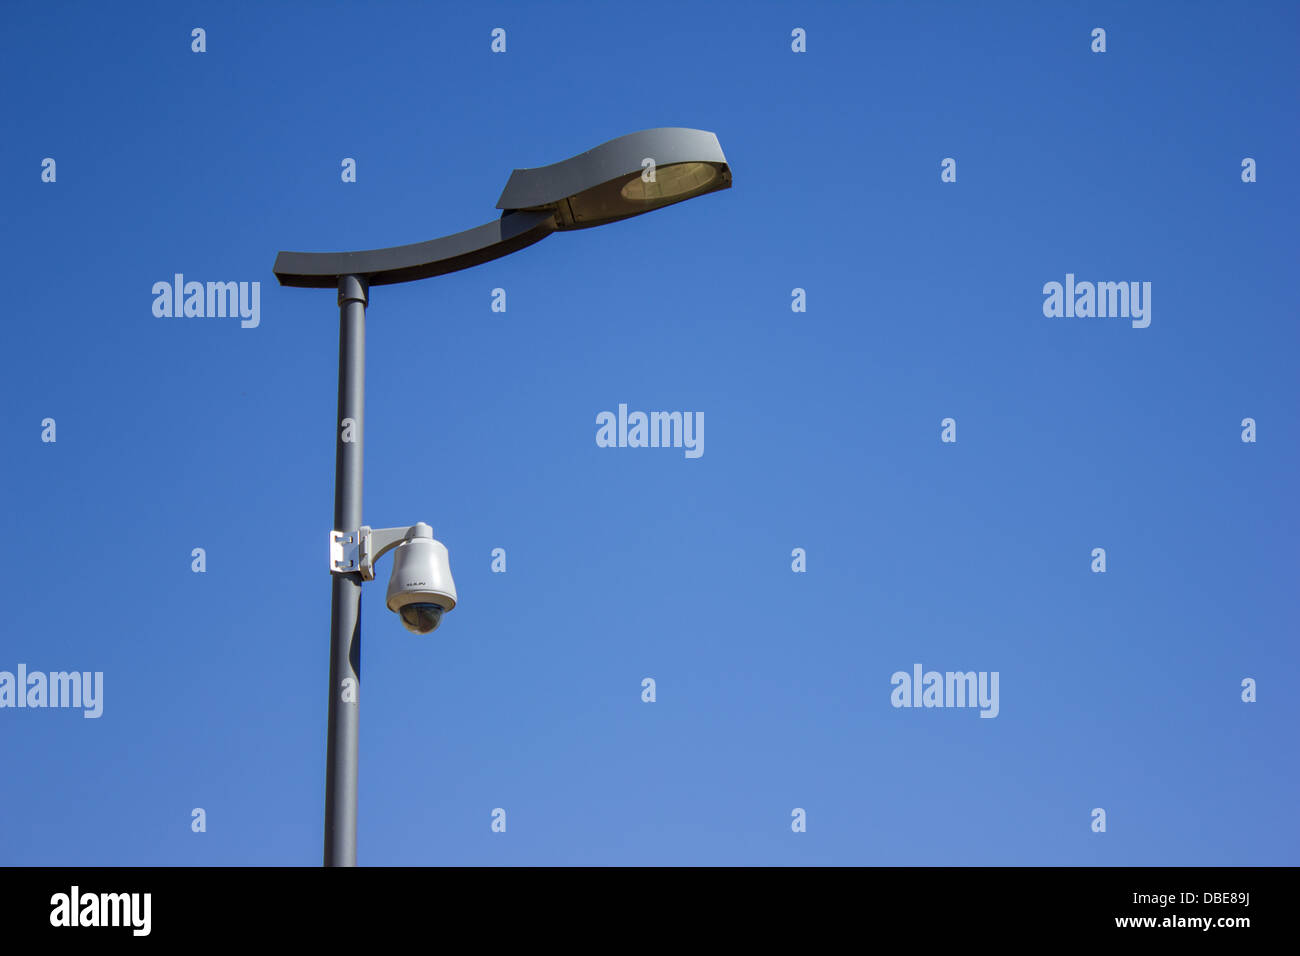 Street lamp in day light surveillance cam Stock Photo